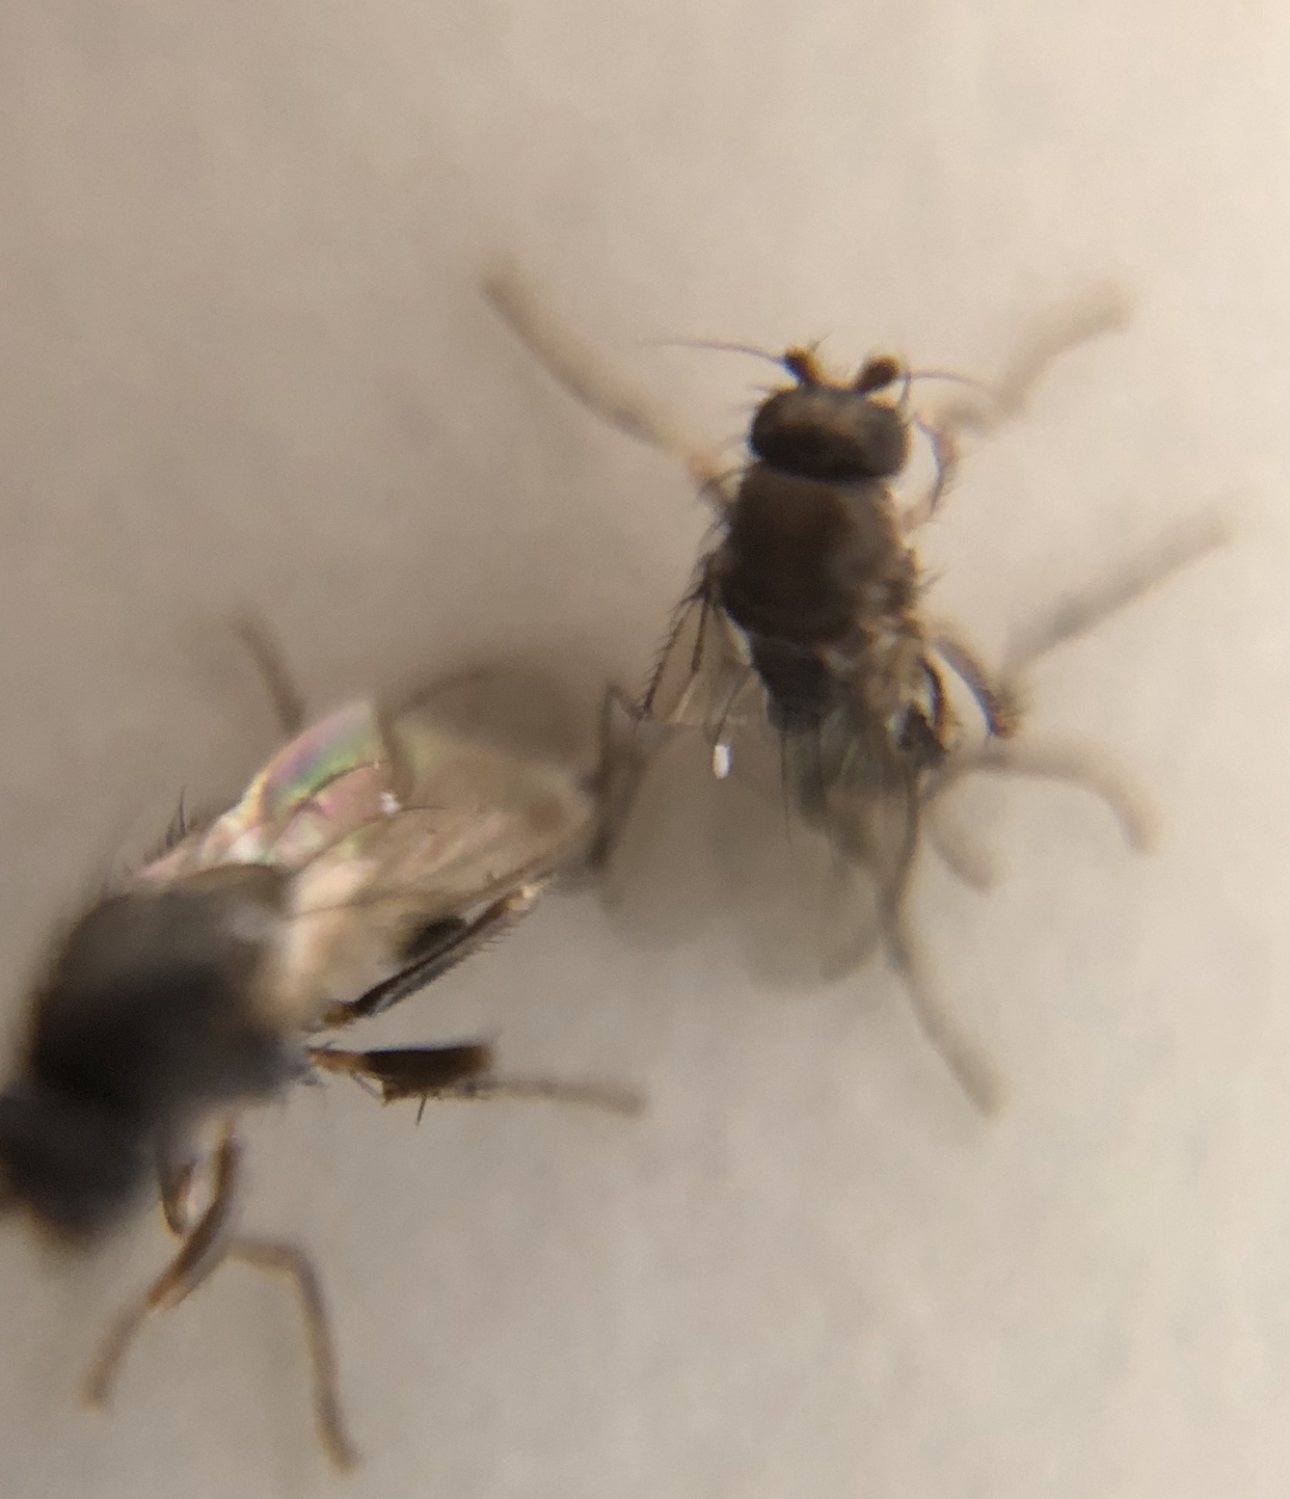 Small Dung Flies Pest Control Exterminator Dahlonega Georgia Cumming Cleveland